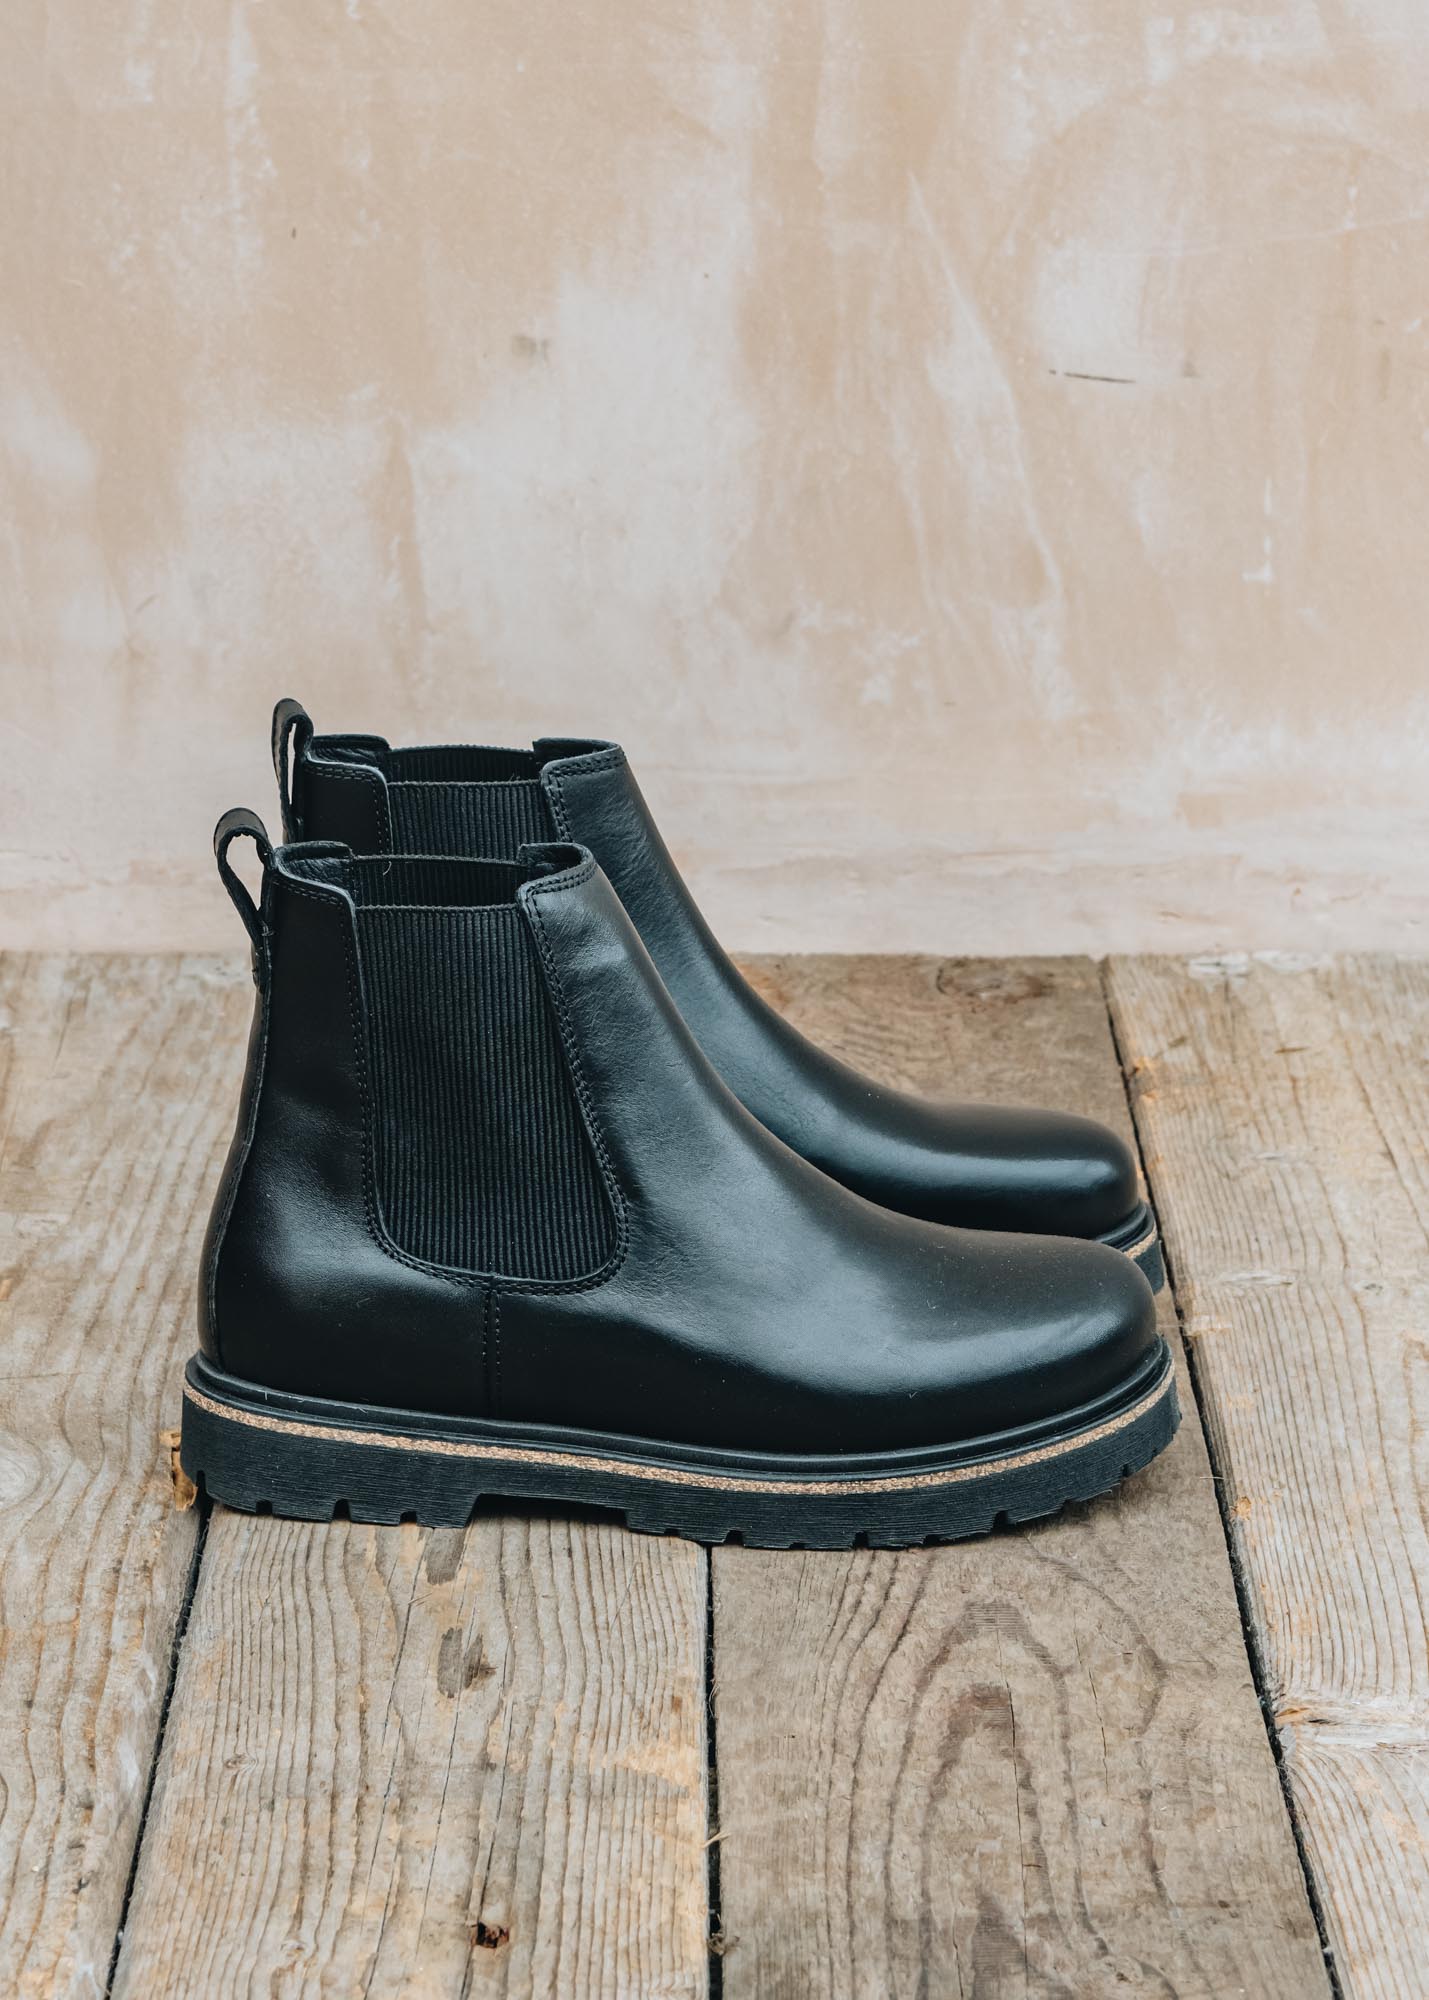 Women's Narrow Birkenstock Highwood Slip-On Chelsea Boots in Black Leather